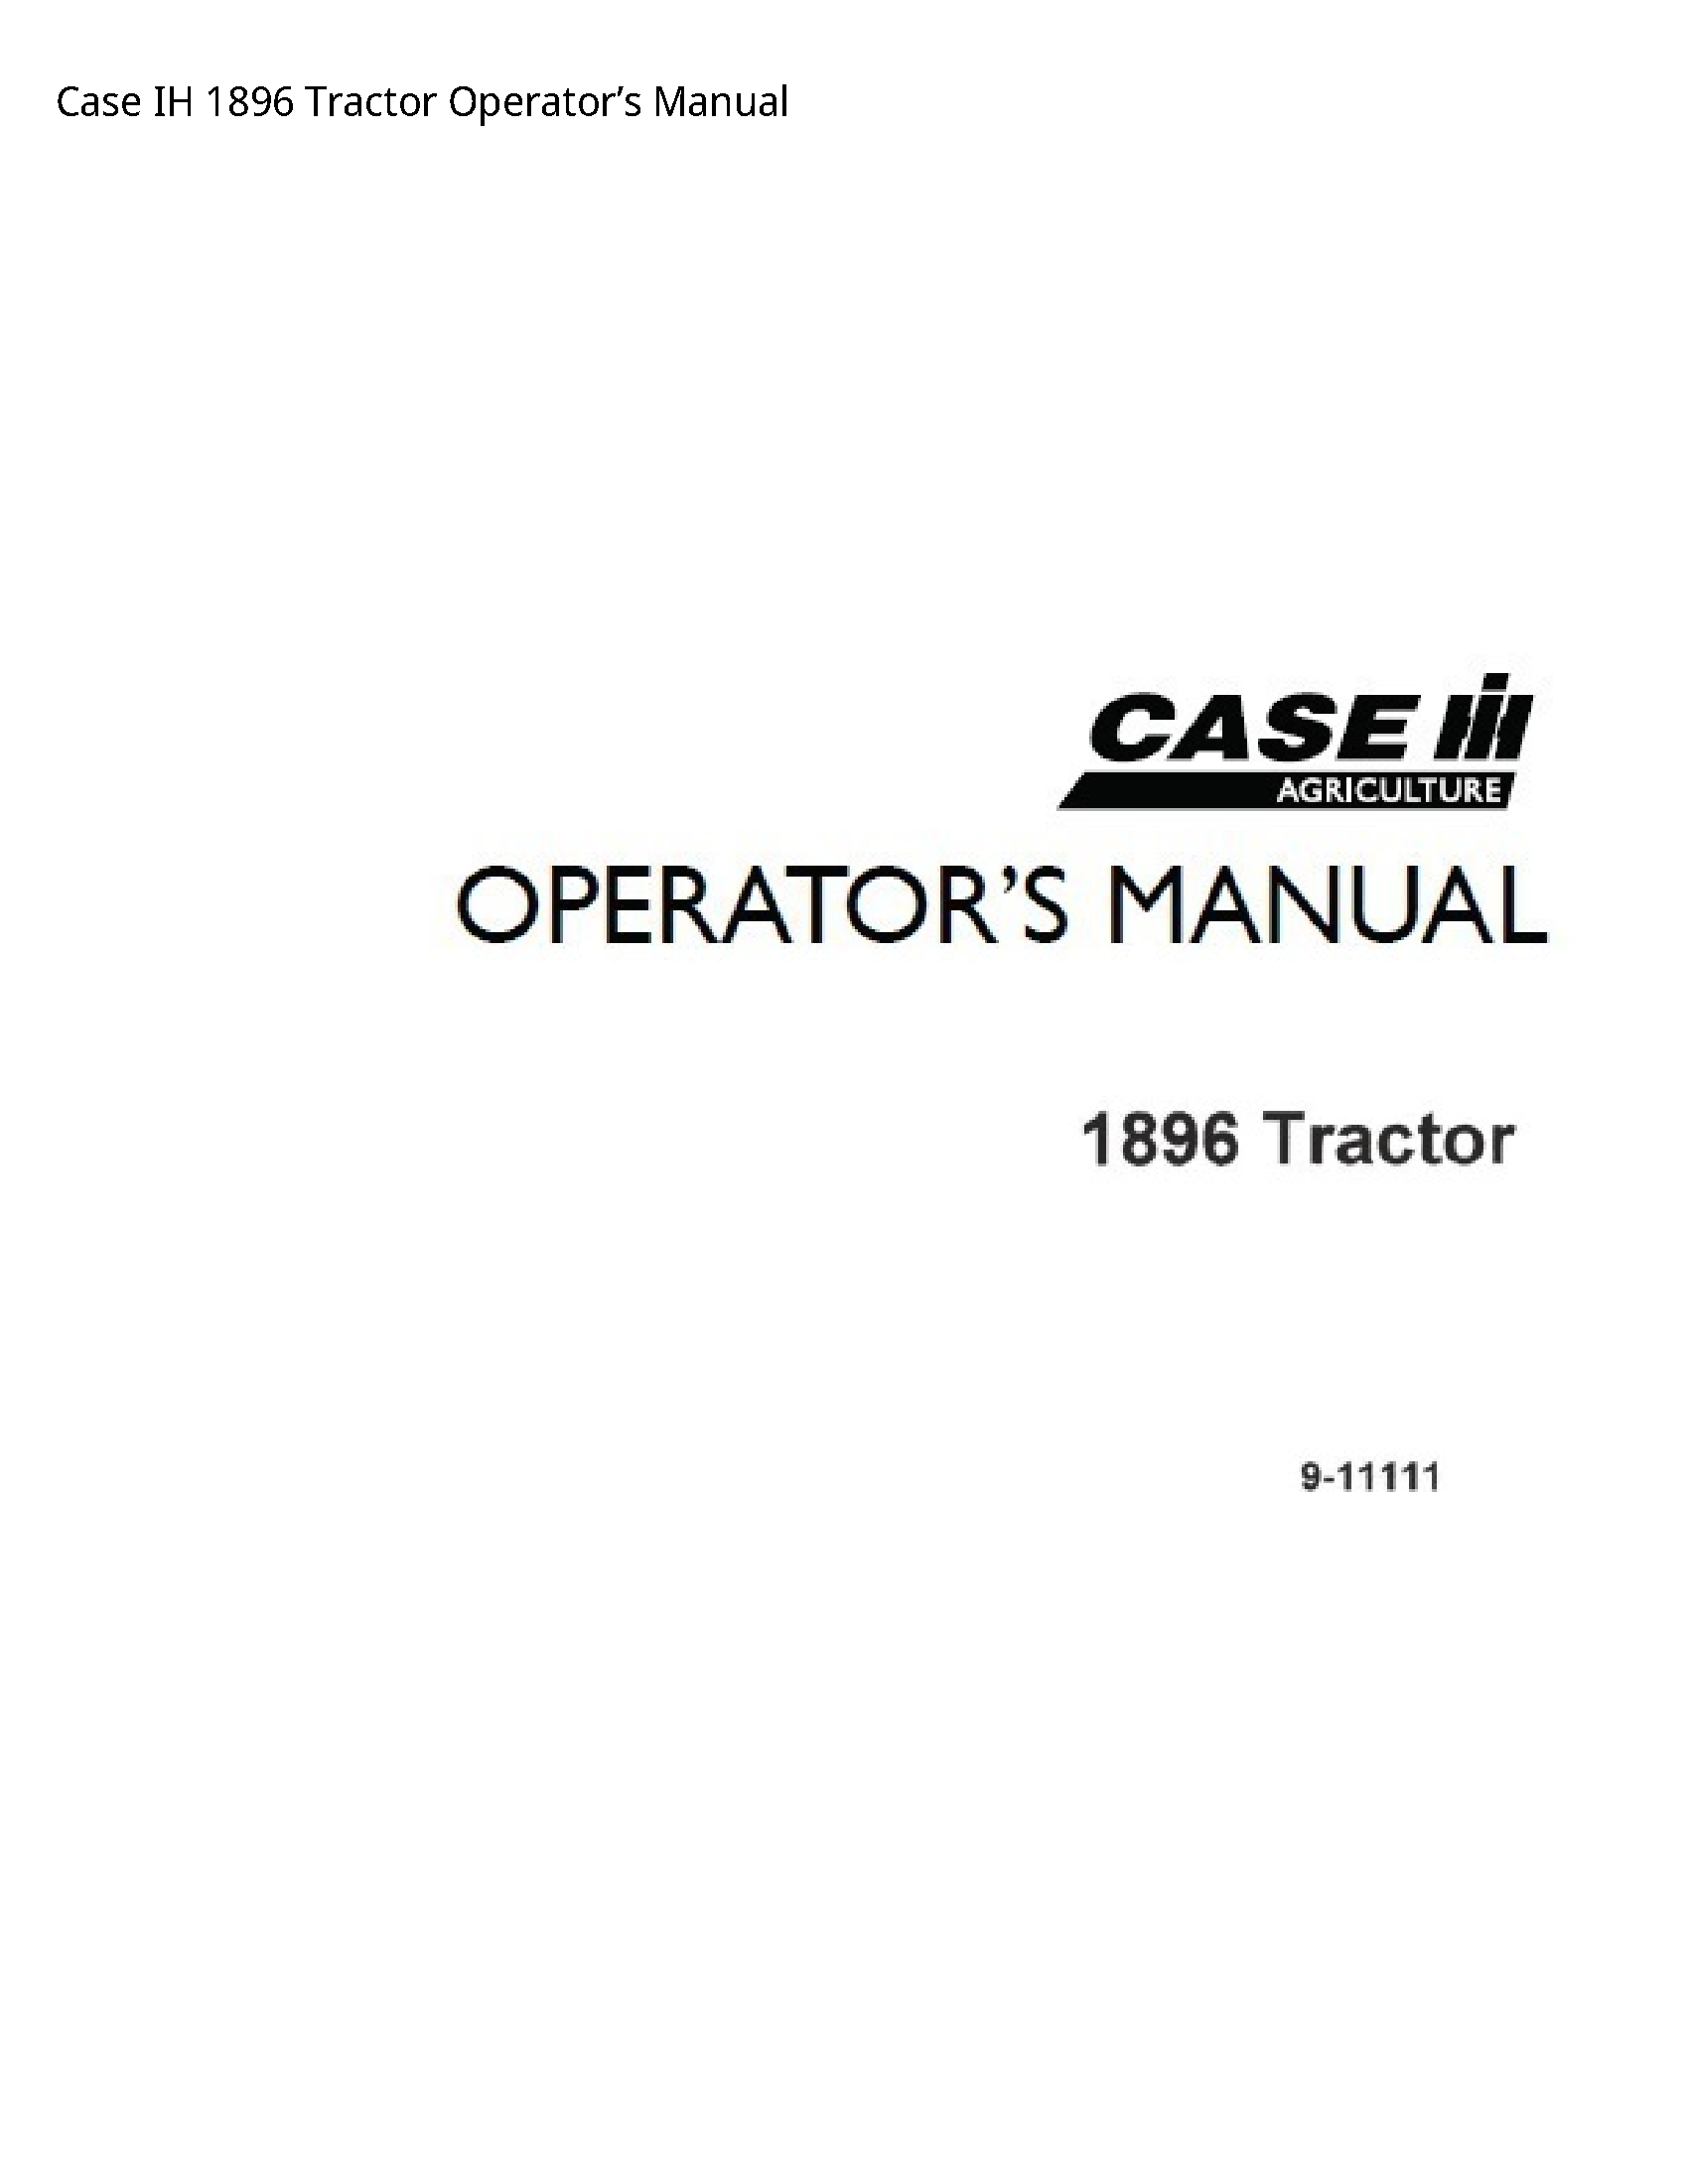 Case/Case IH 1896 IH Tractor Operator’s manual